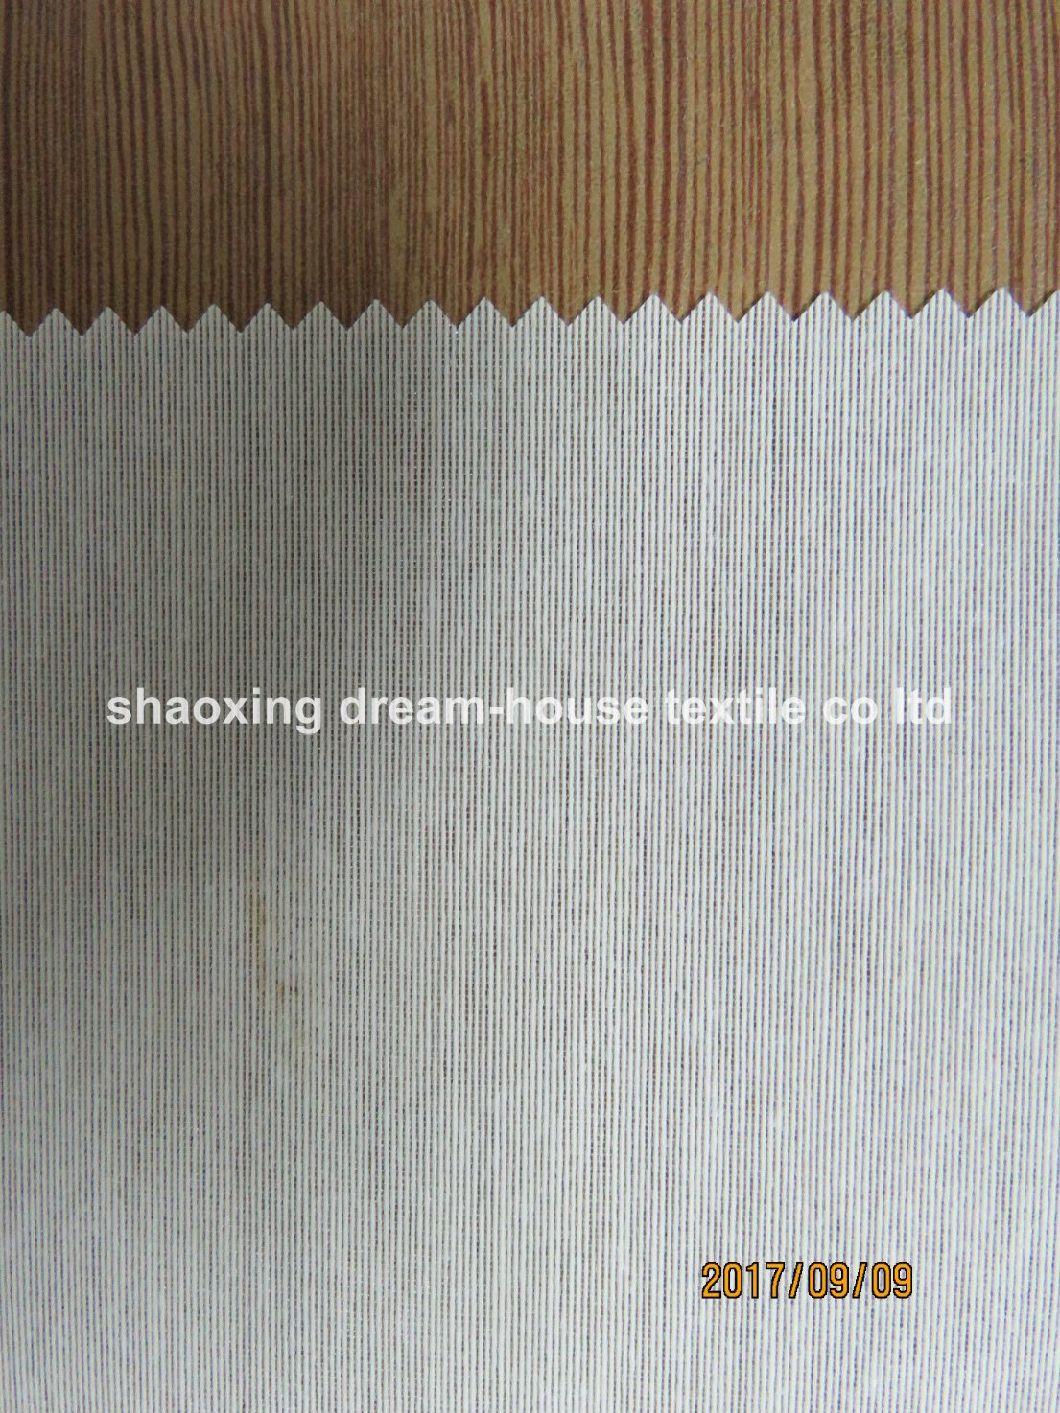 New Design Indoor Custom Decorative Shangri-La Dimout Fabric Window Roller Blind and Fabric Free Inspection Premium